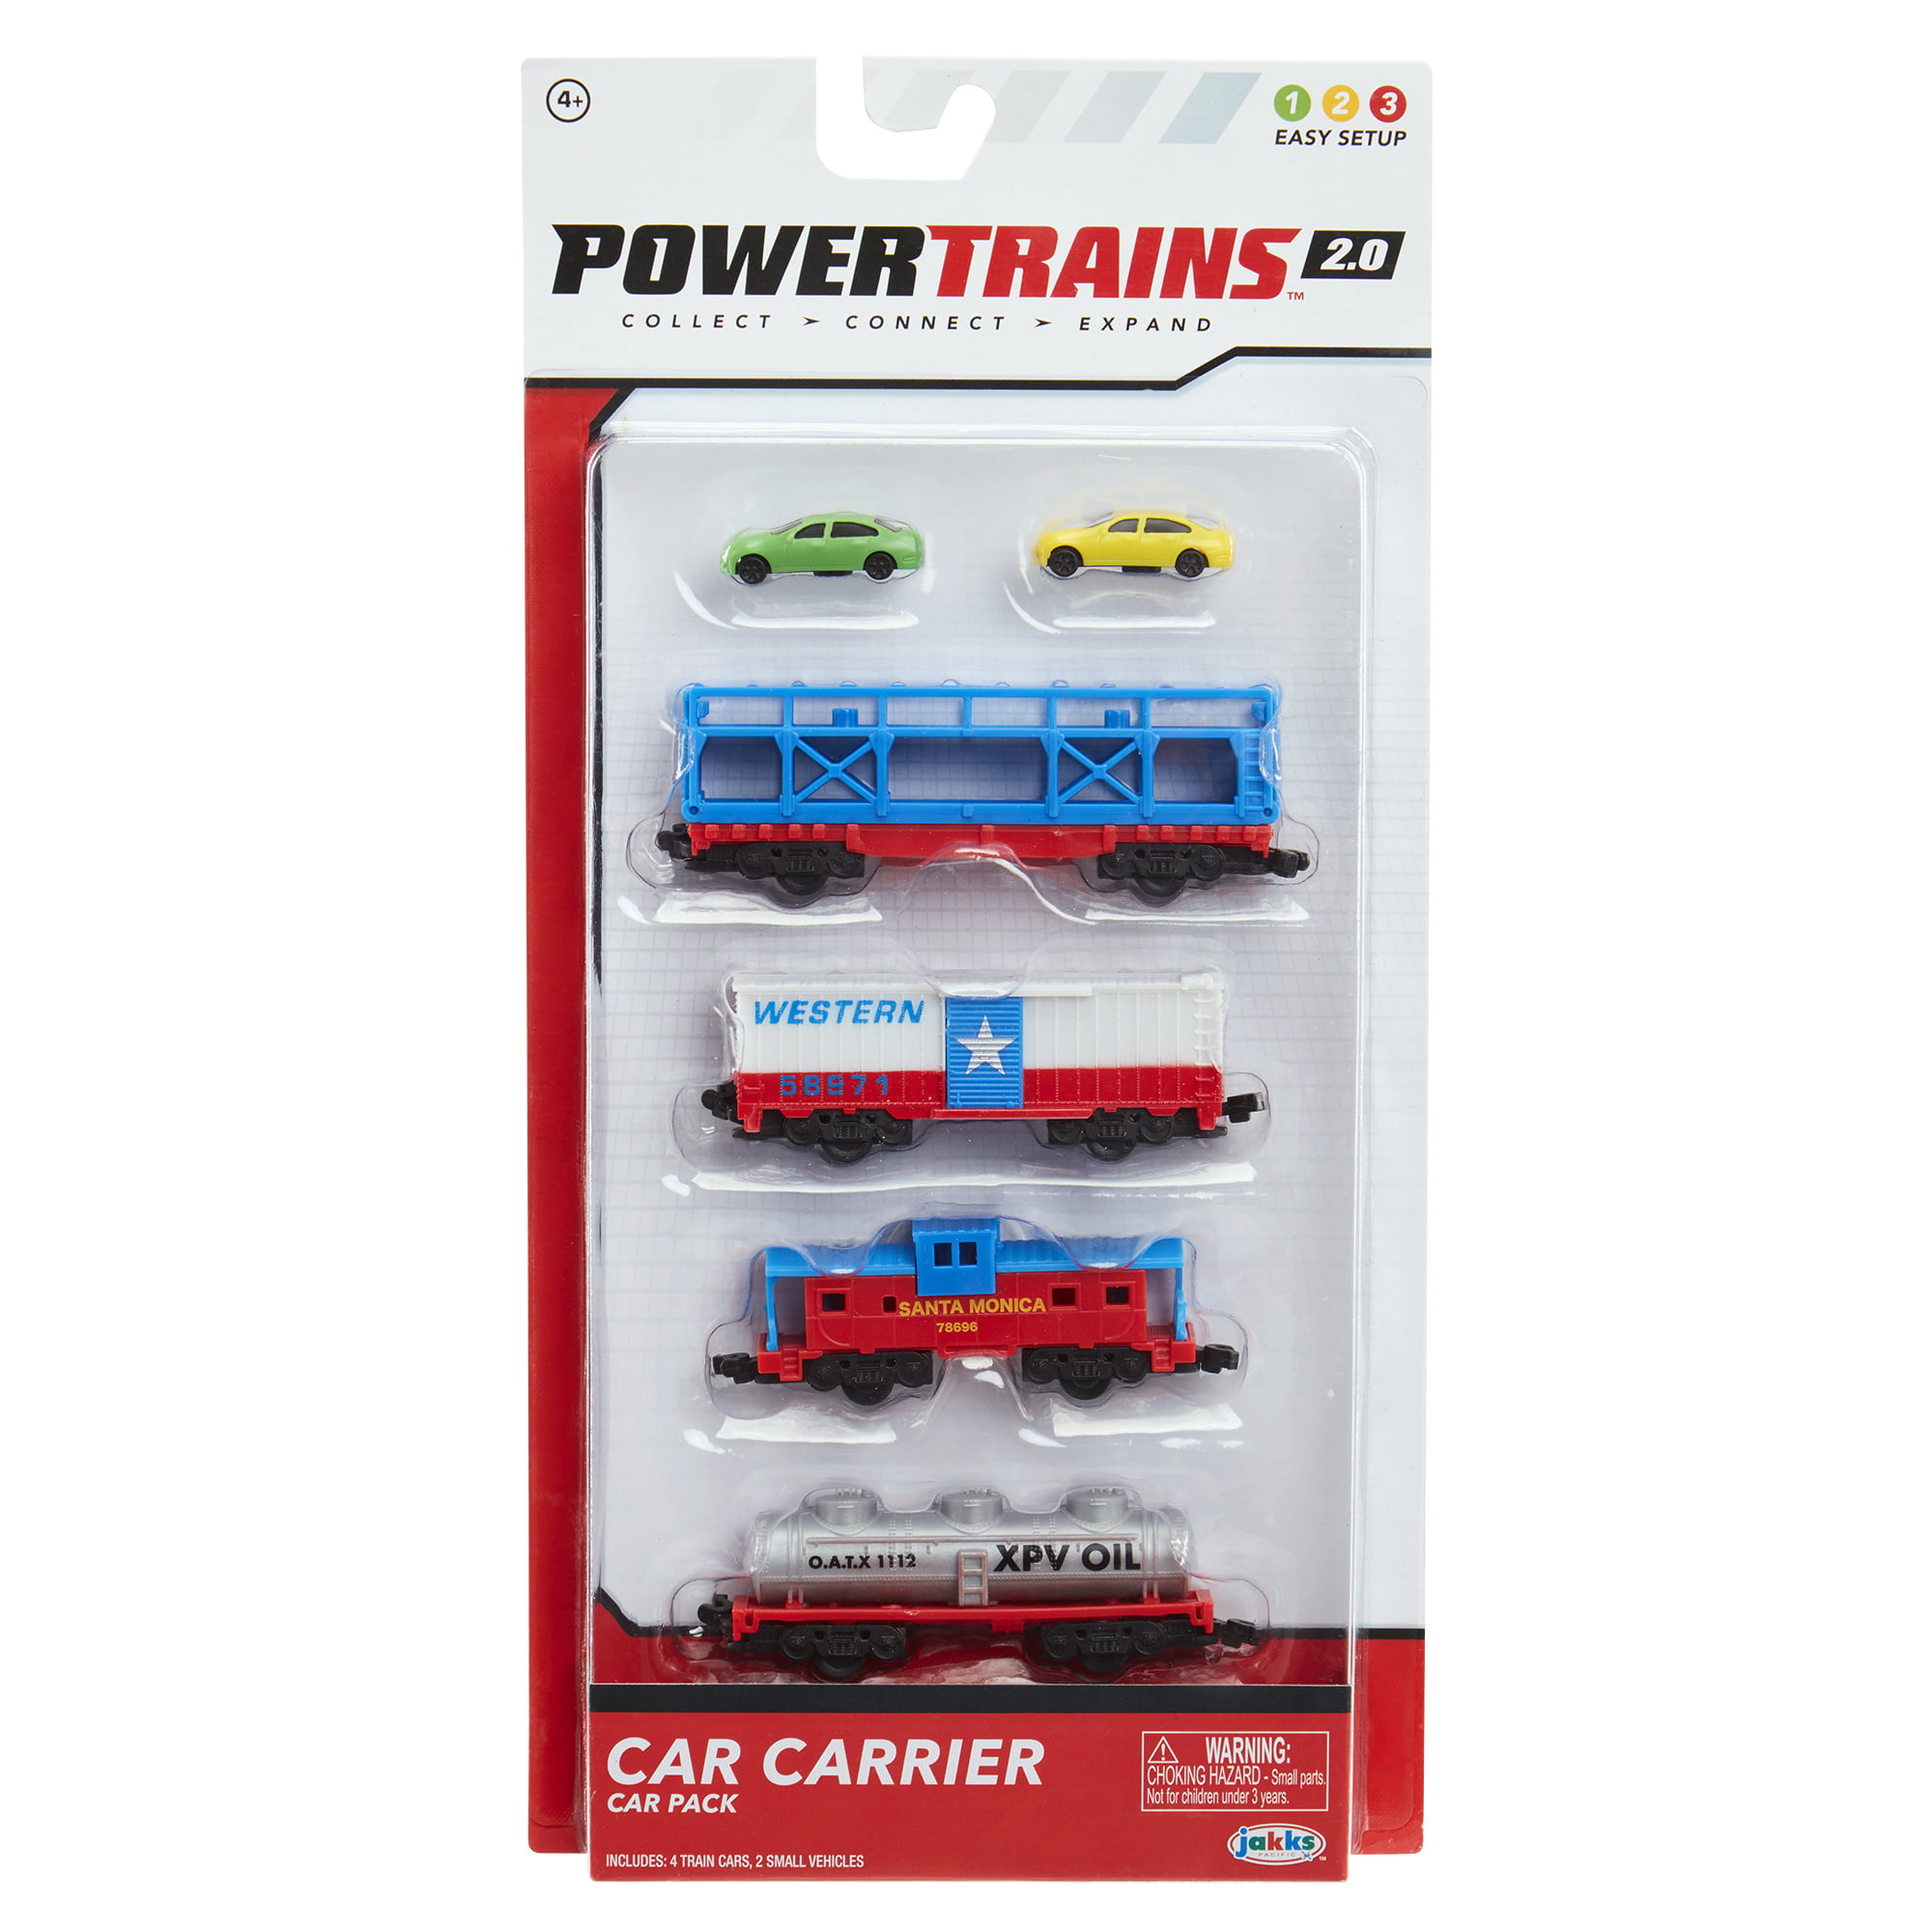 Power Trains Car Pack Series 2 Set of 4 Train Cars Model B07h4j9cjy for sale online 